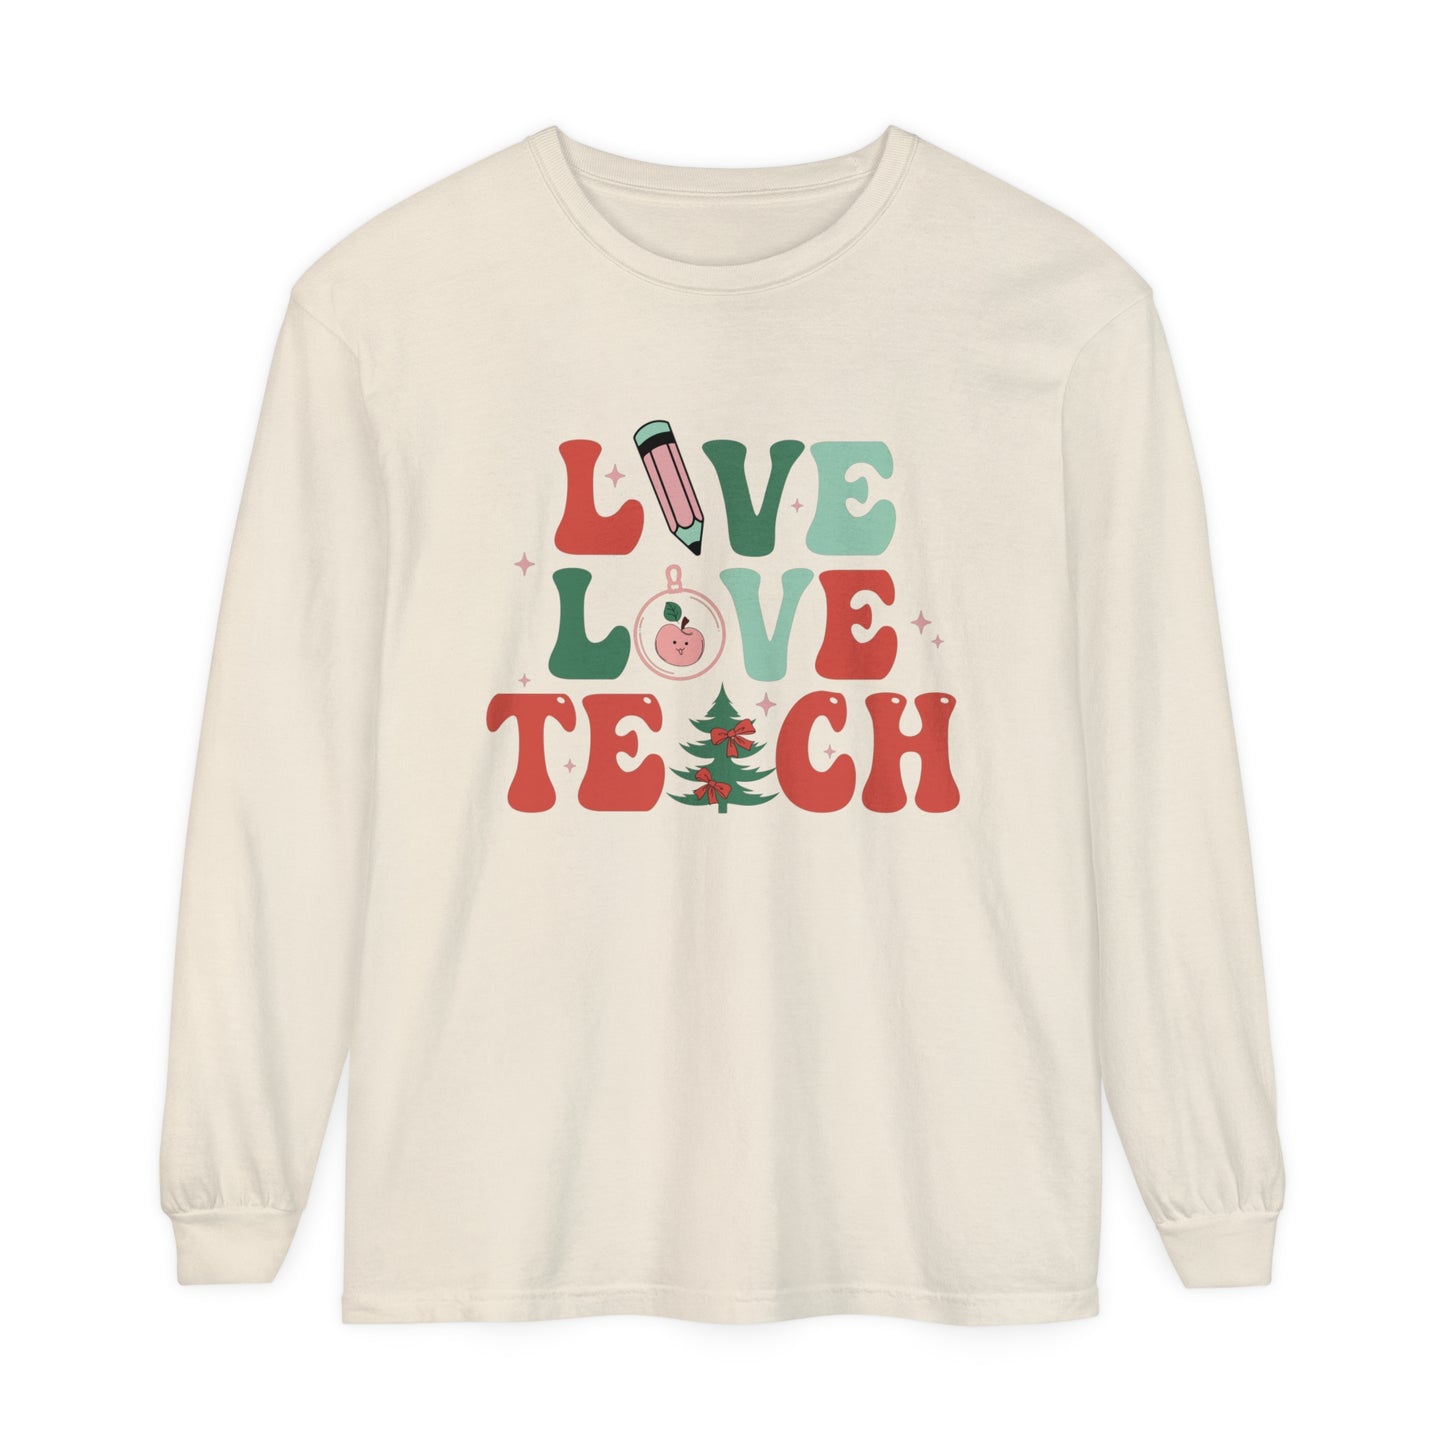 Live Love Teach Women's Christmas Loose Long Sleeve T-Shirt